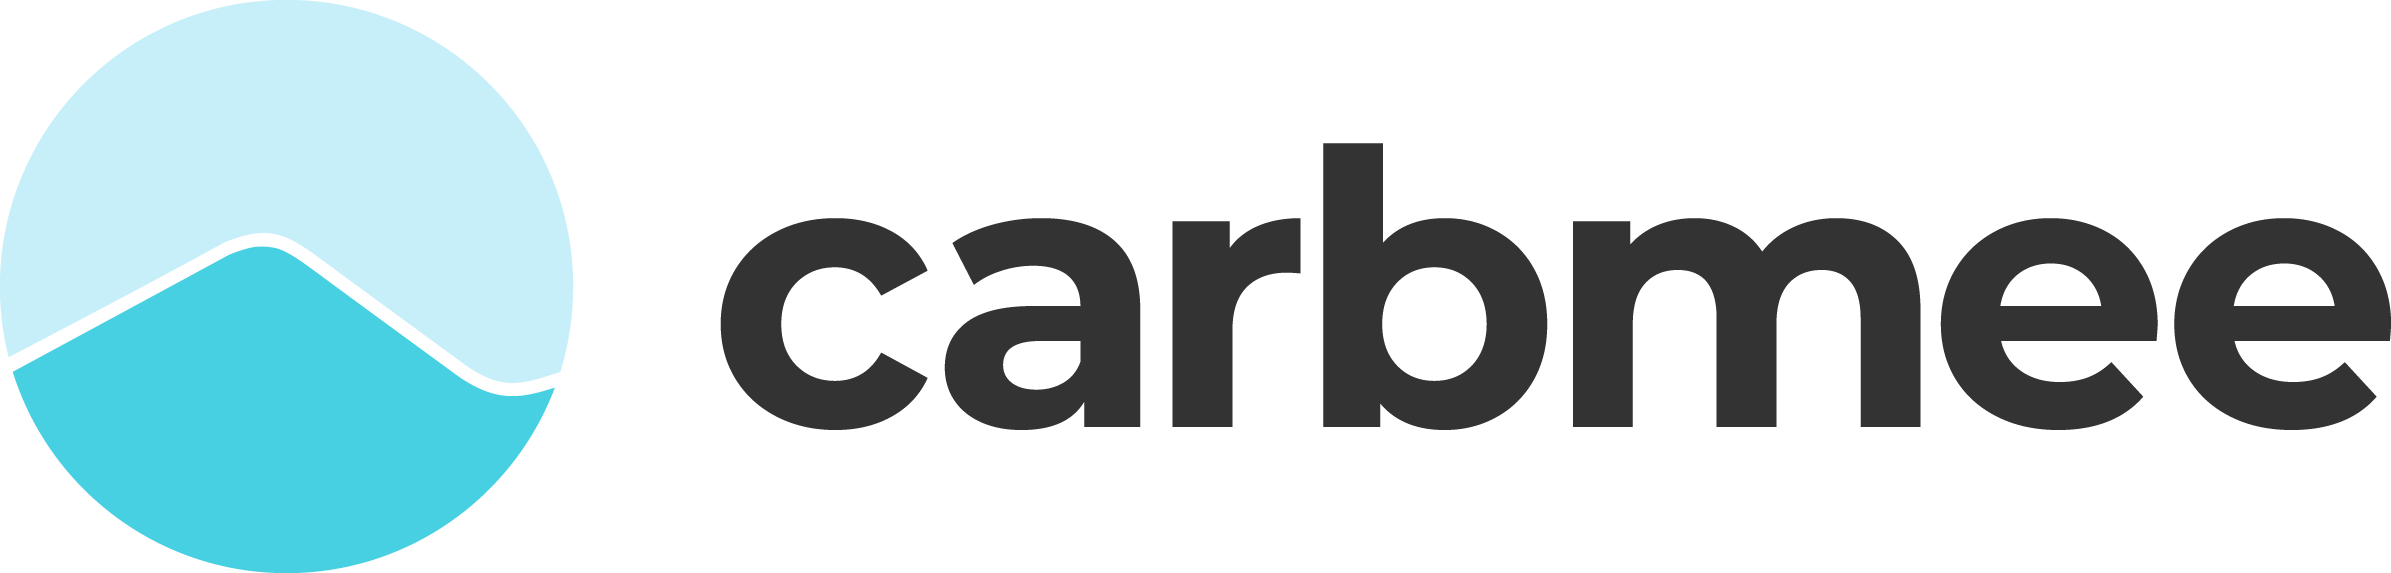 Carbmee logo